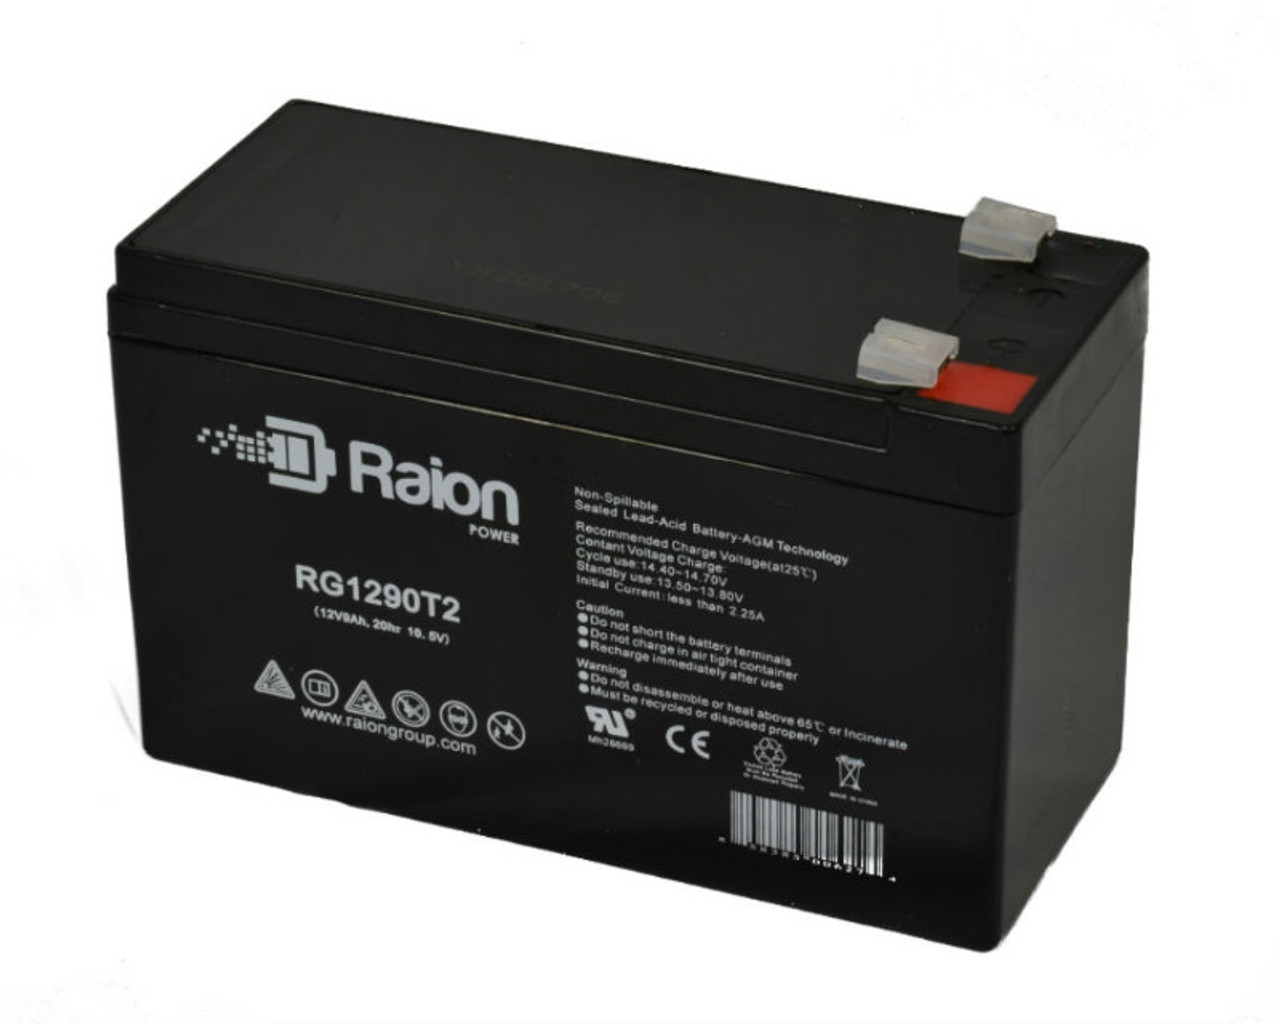 Raion Power RG1290T2 12V 9Ah AGM Battery for Vision CP1280H